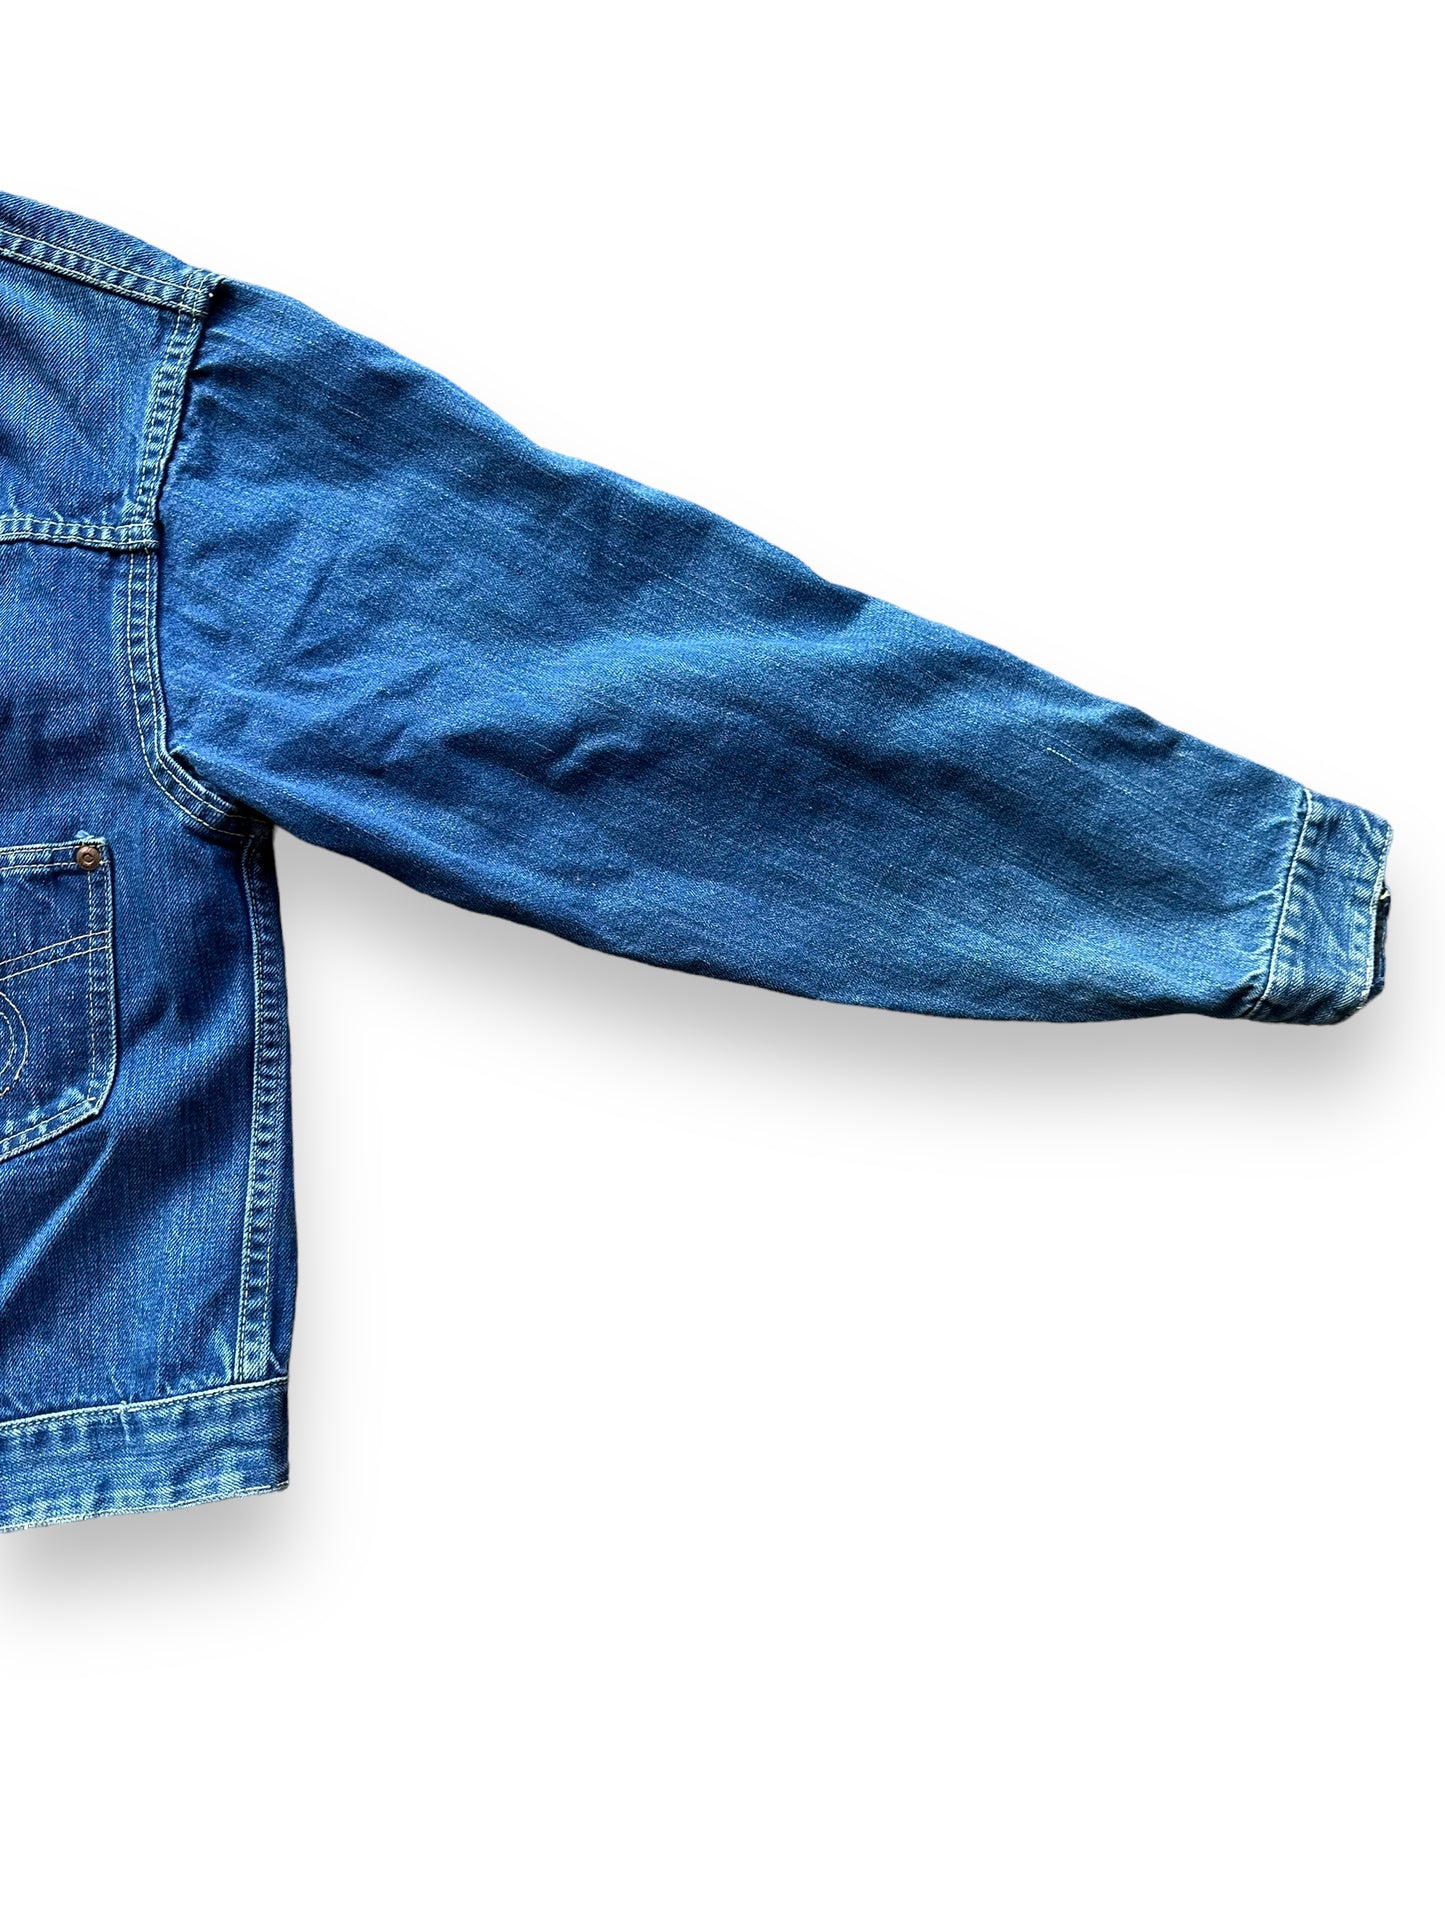 Left Sleeve View of Vintage Montgomery Ward 101 Selvedge Denim Jacket SZ S | Vintage Jean Jacket Seattle | Seattle Vintage Denim